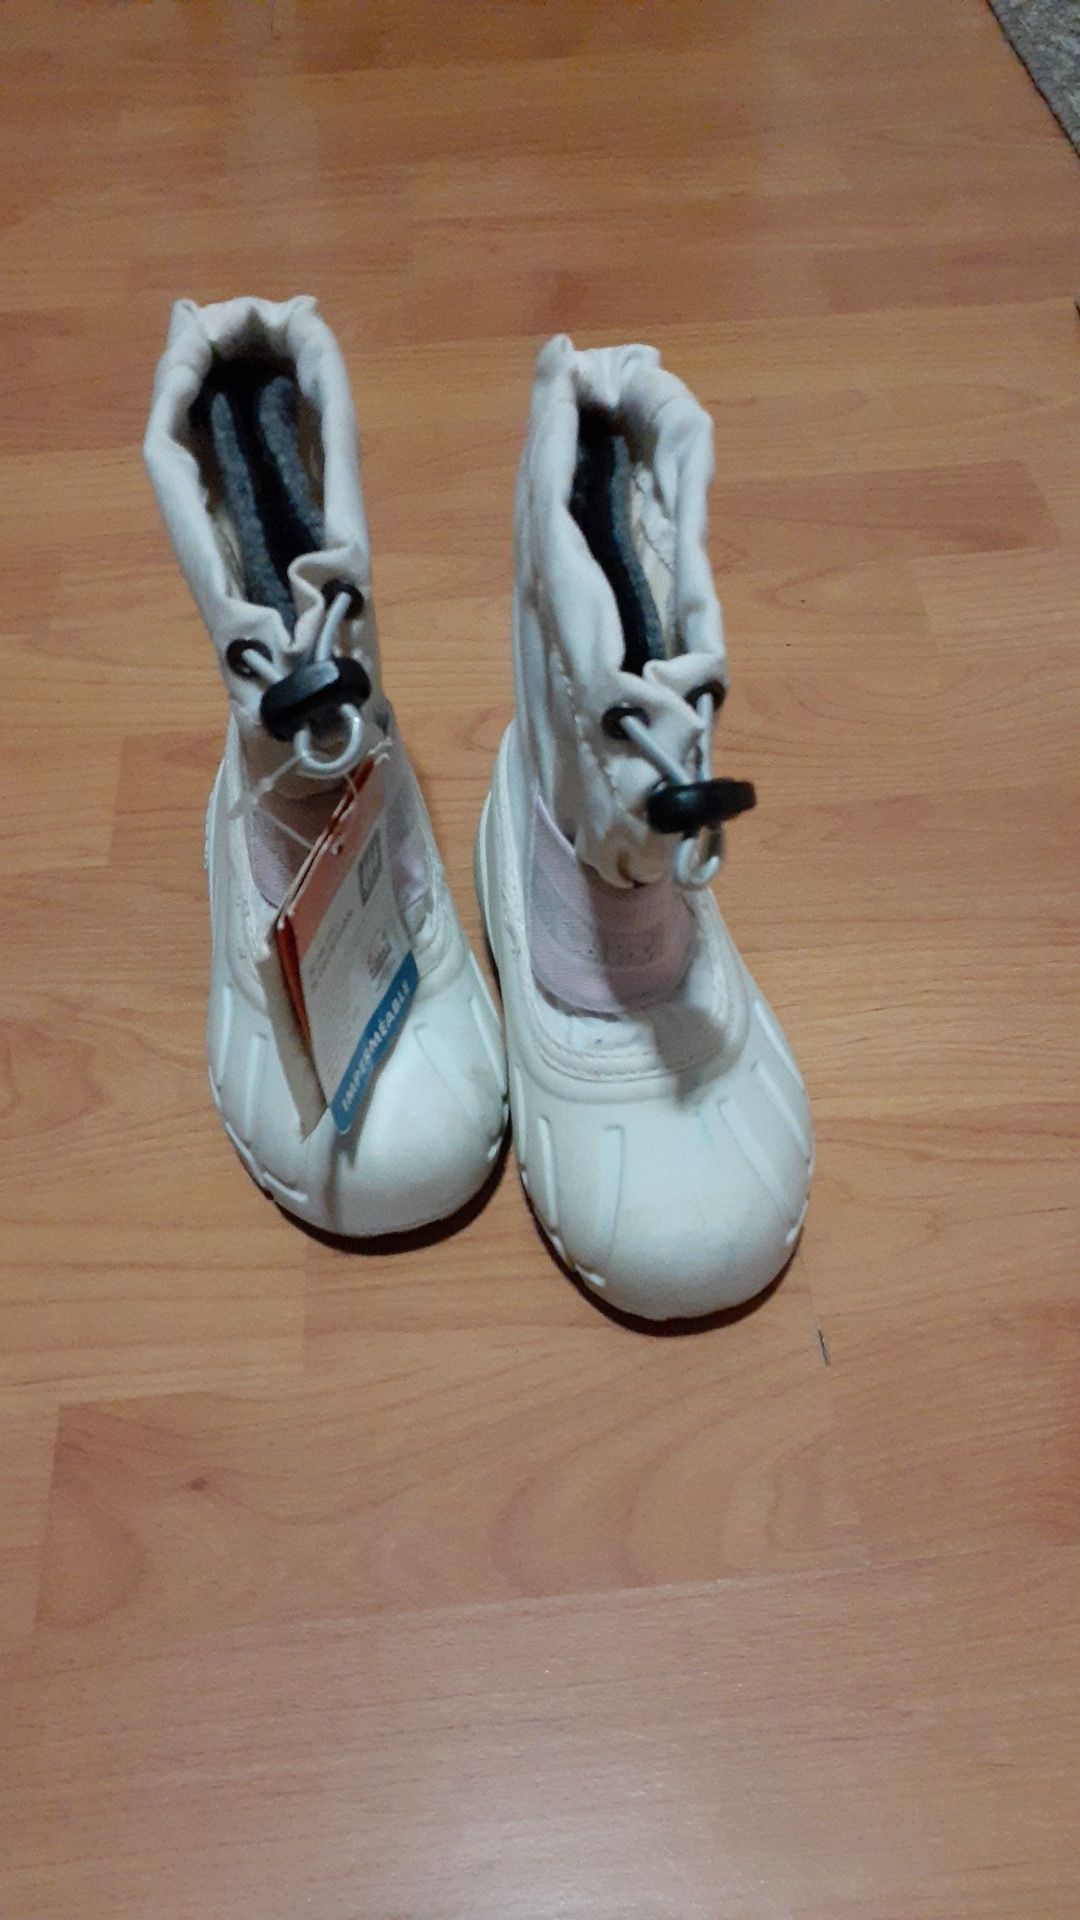 Girls snow boots